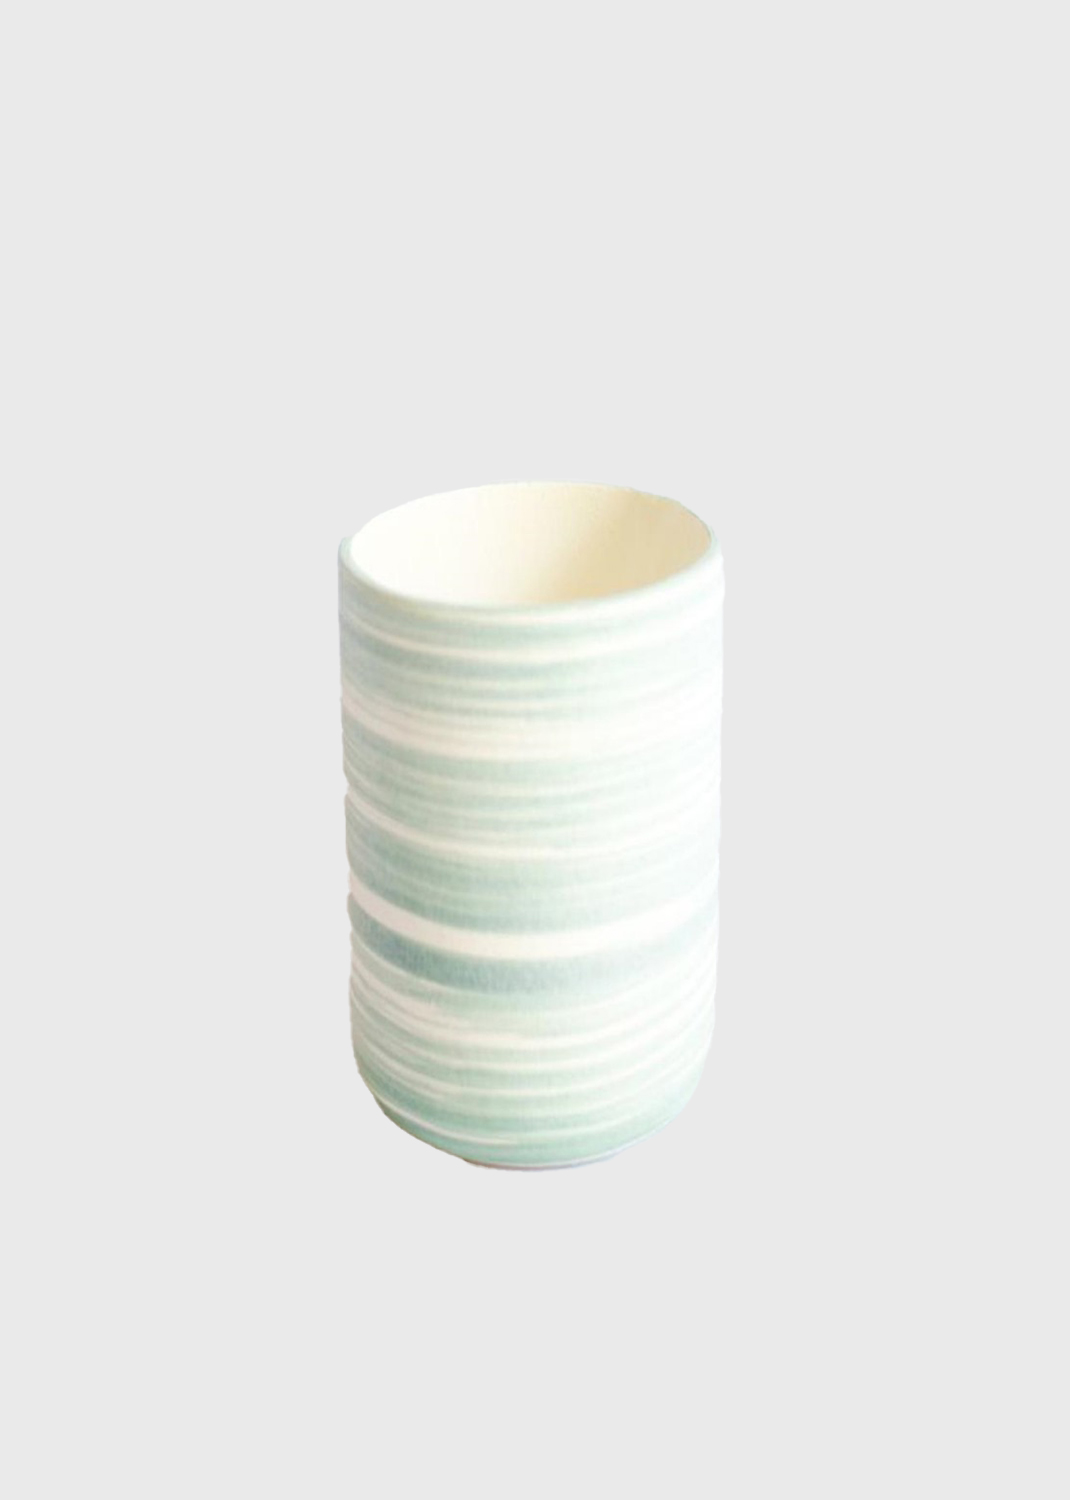 white ceramic pot